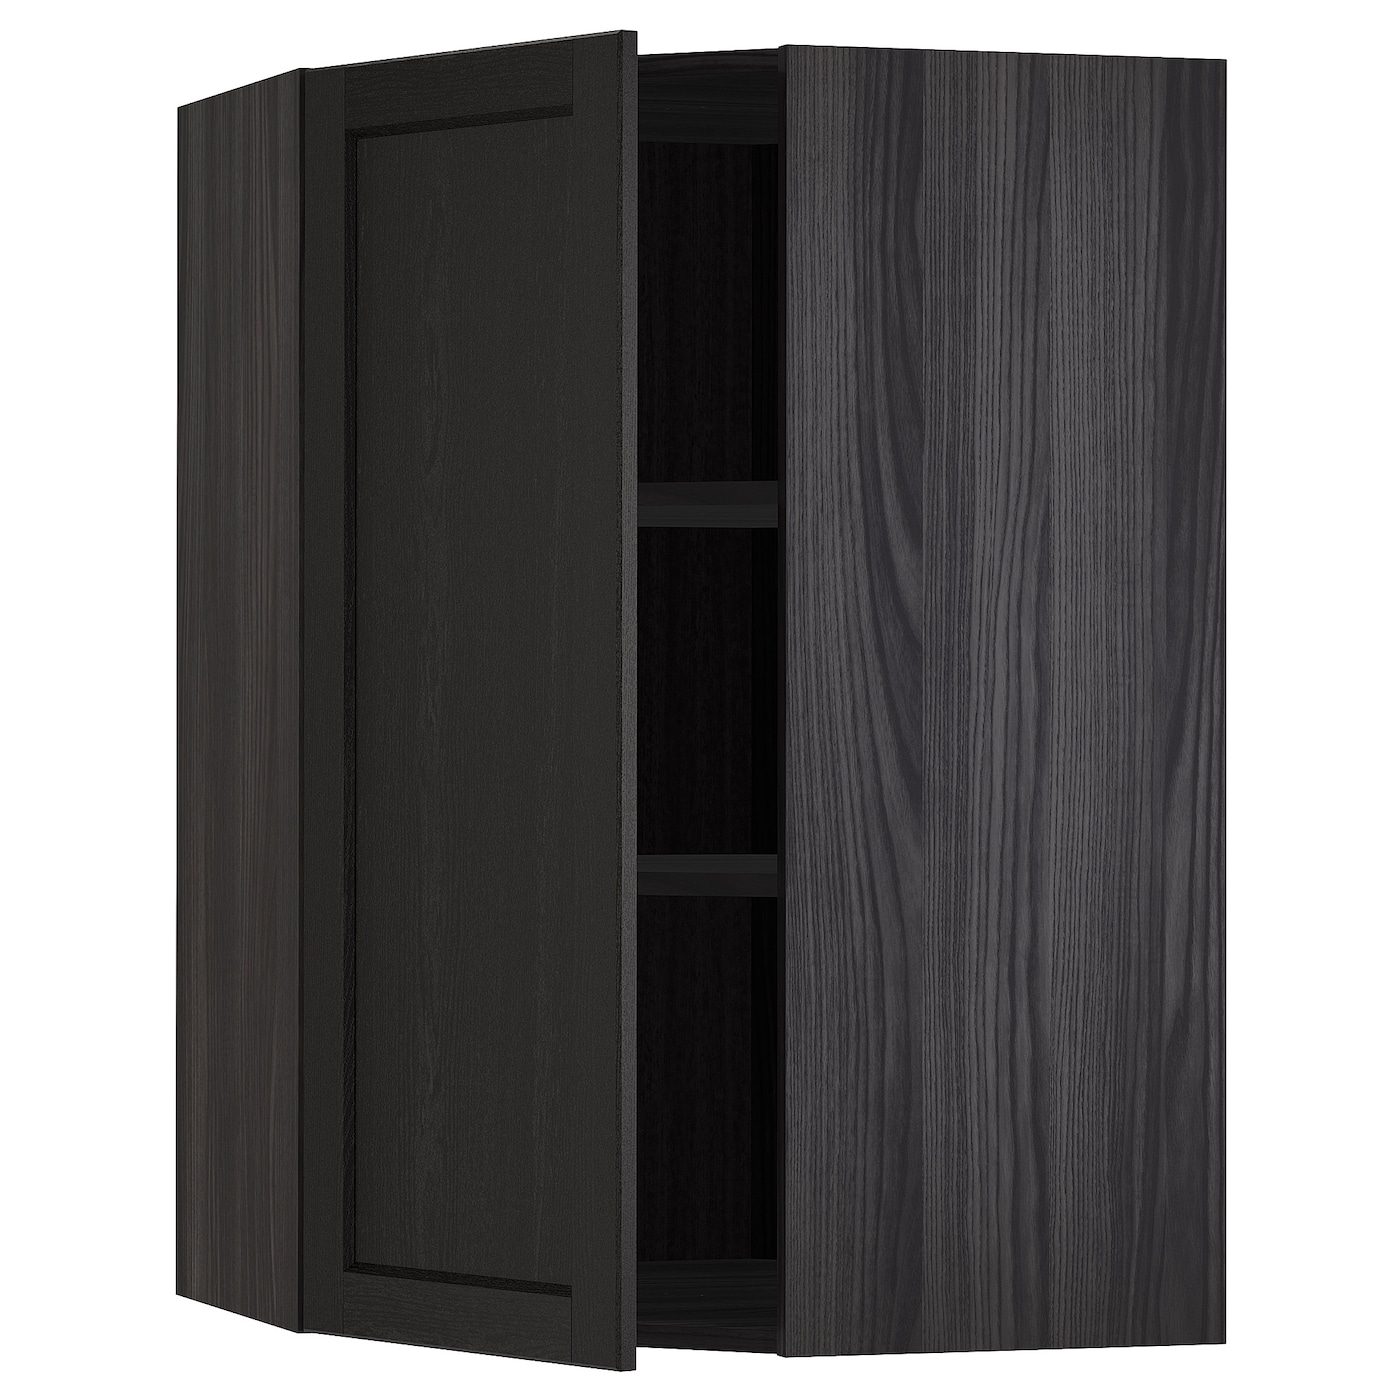 METOD Навесной шкаф - METOD IKEA/ МЕТОД ИКЕА, 100х68 см, черный